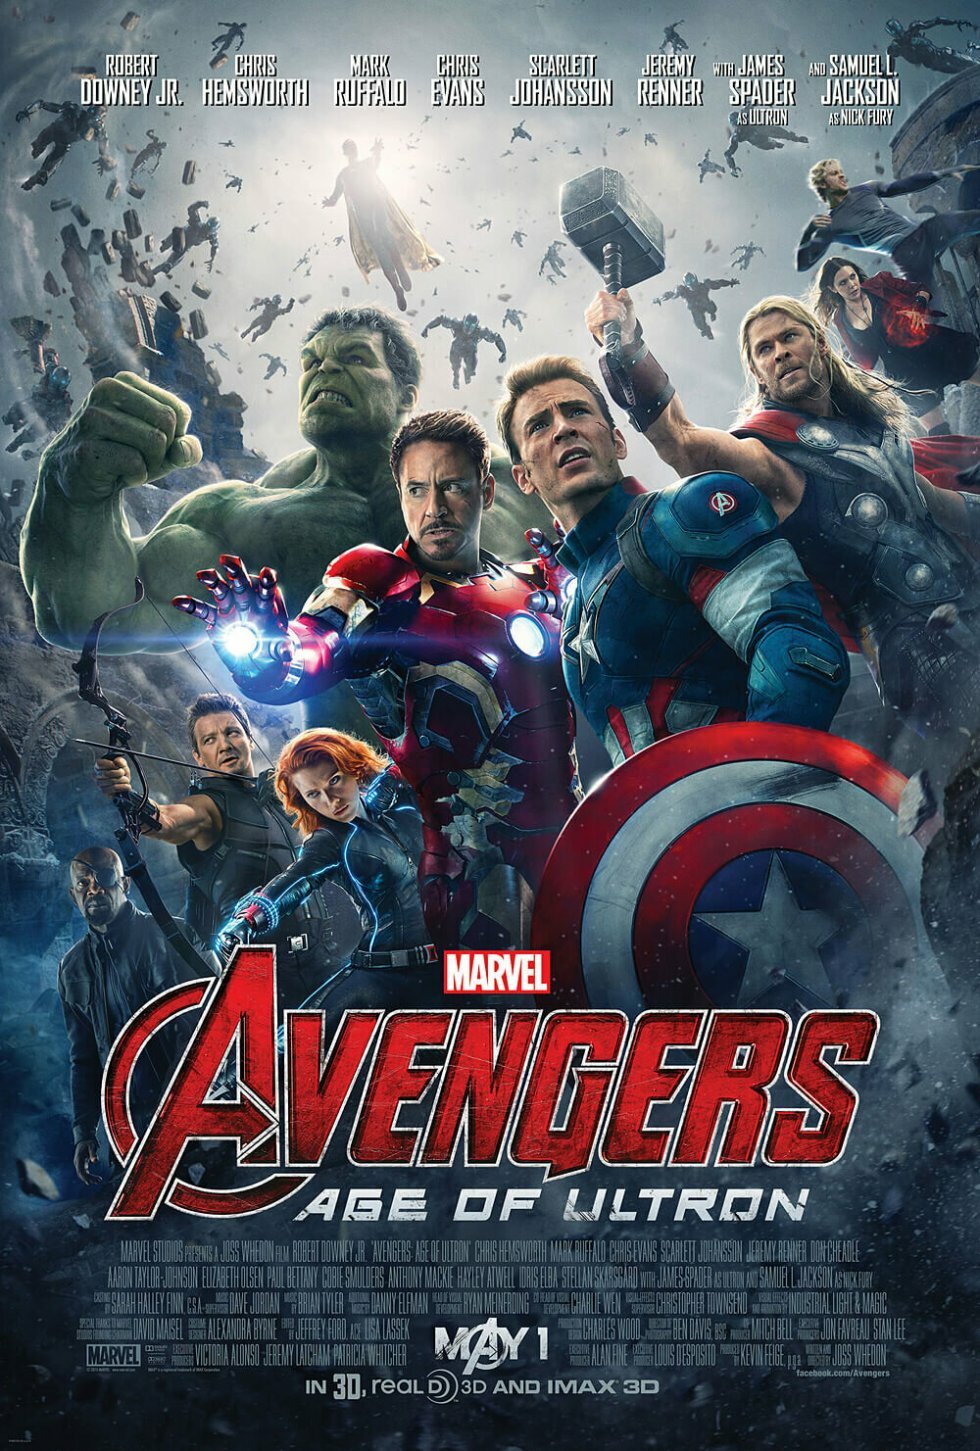 Avengers: Age of Ultron - Marvel Studios - 71 timers film-maraton: I denne rækkefølge skal du se Marvel filmene